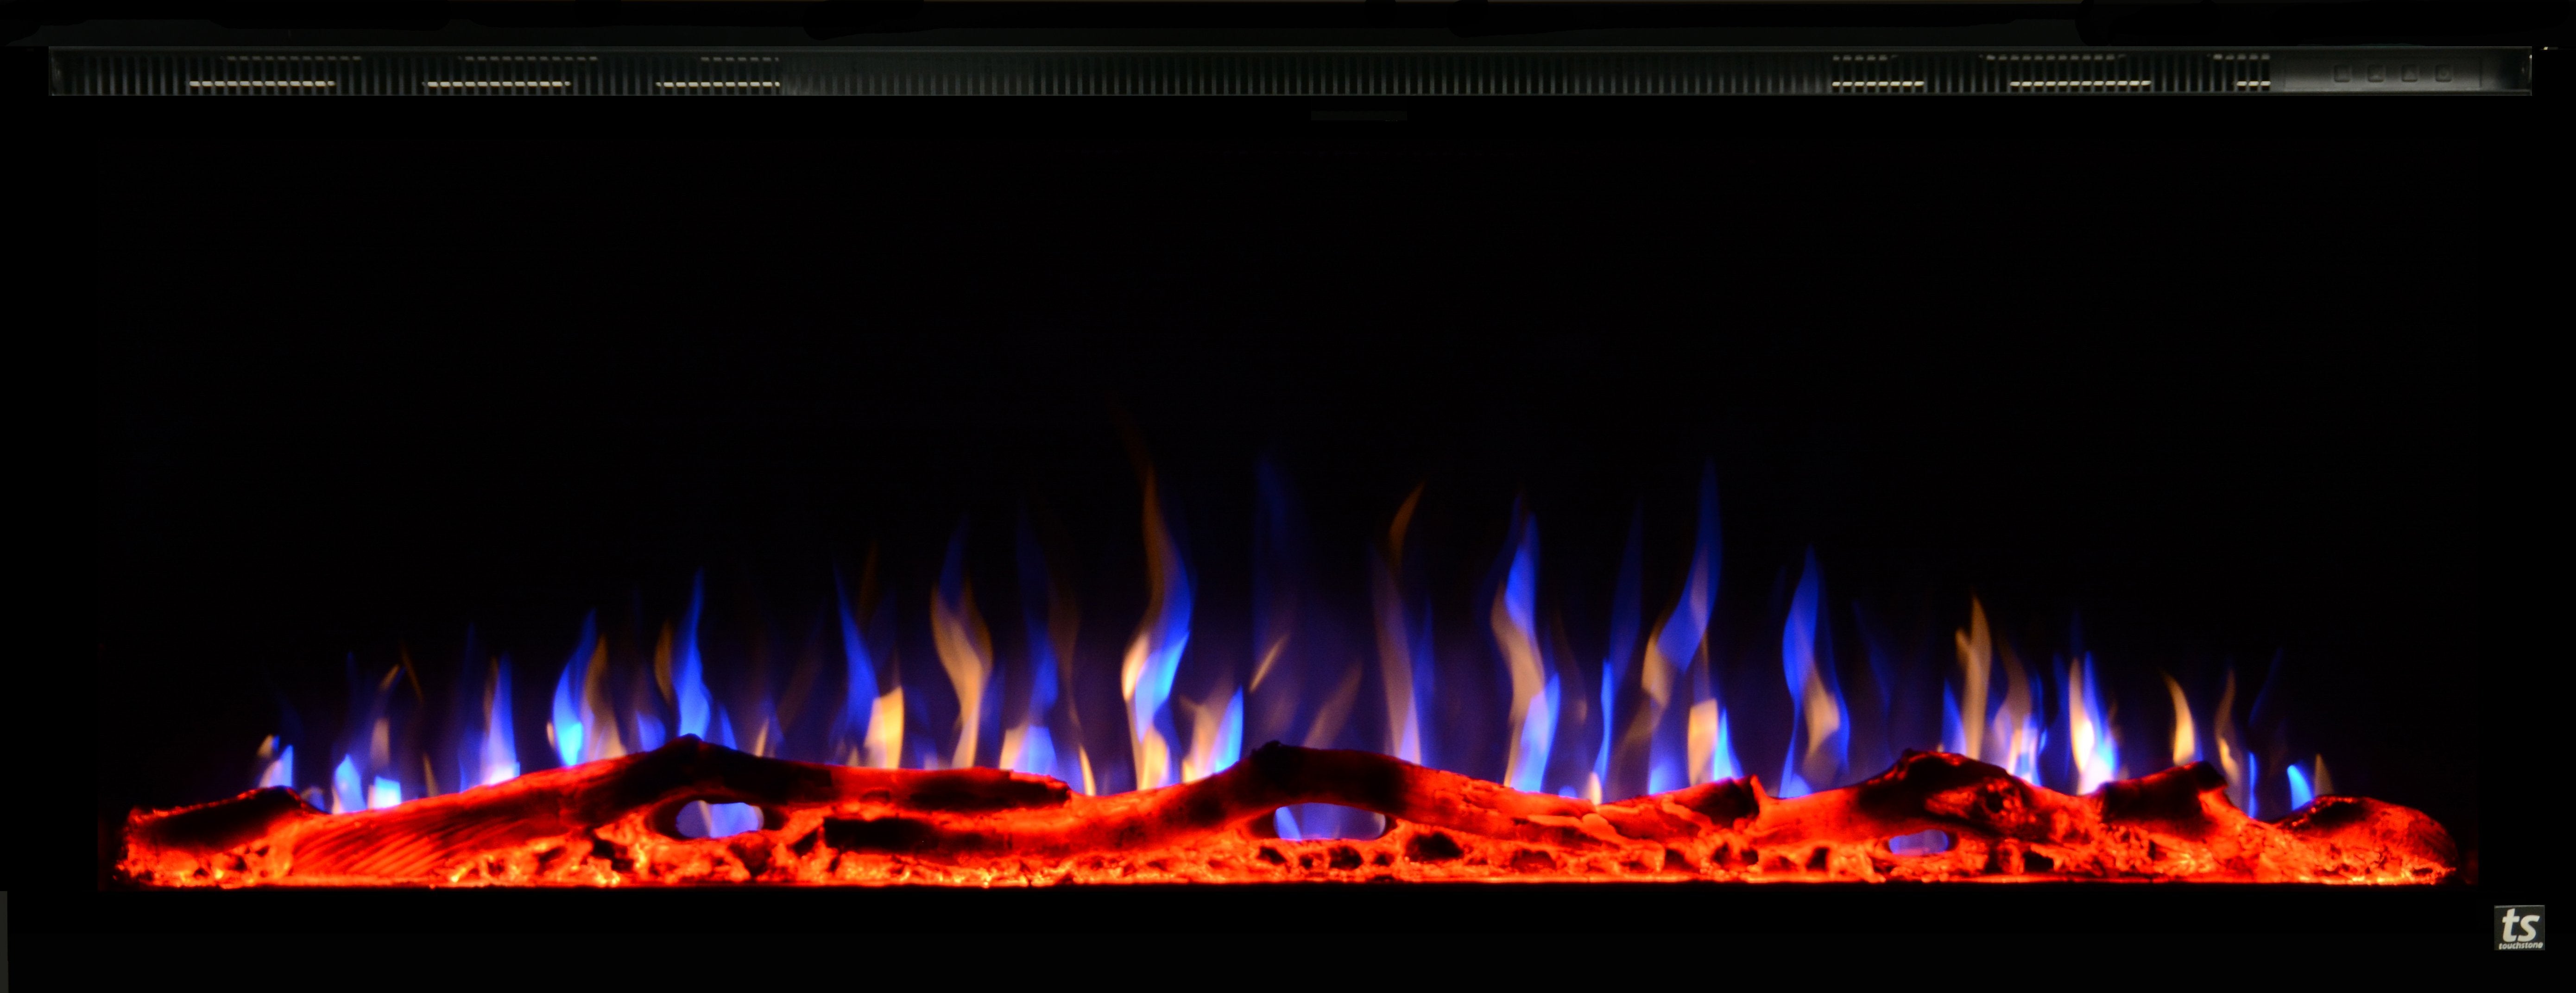 Sideline Elite 72 Refurbished Recessed Electric Fireplace multicolor flames.